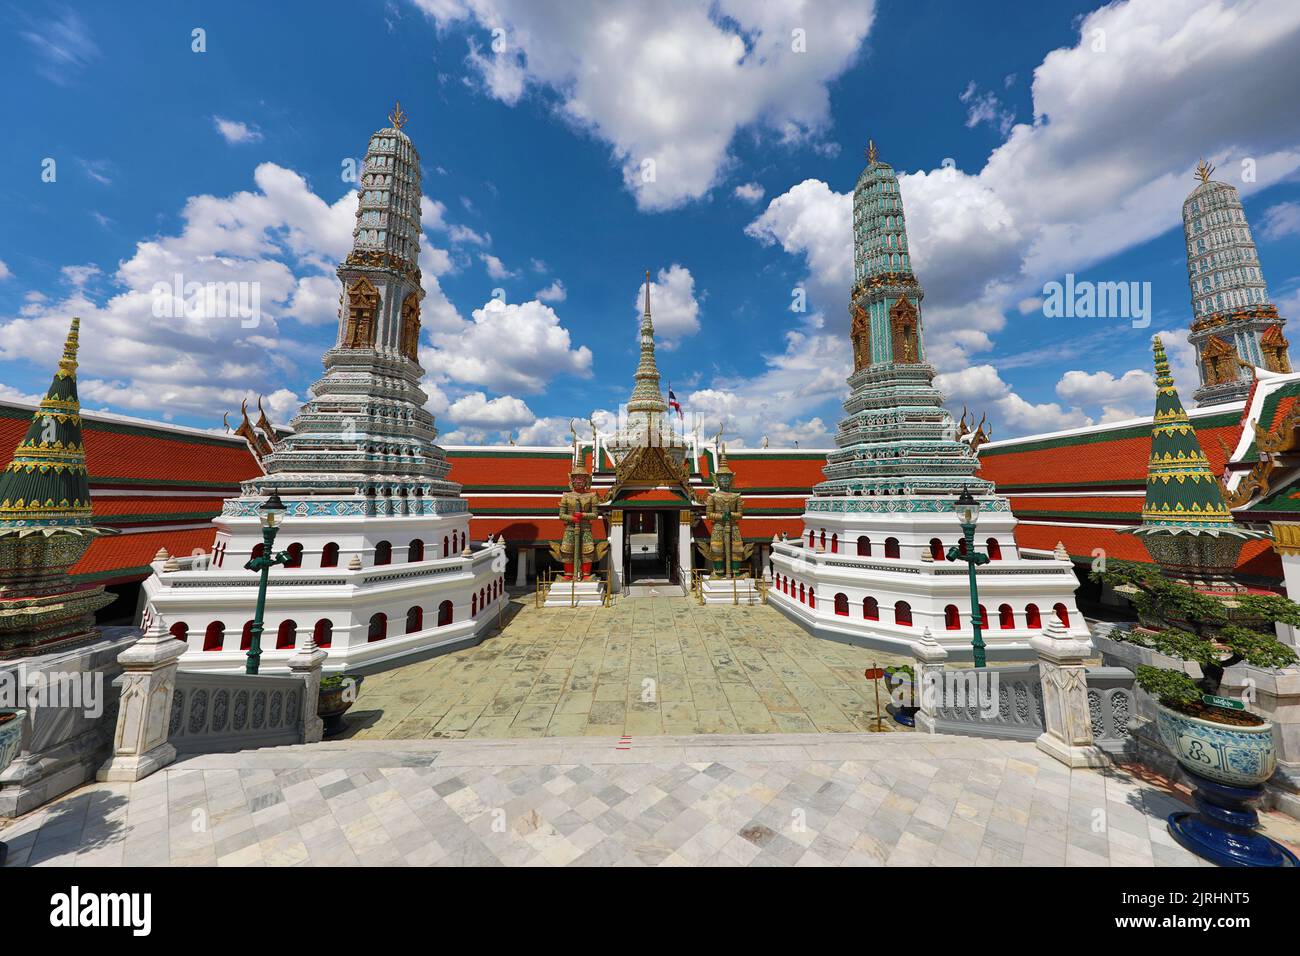 Two Prangs at Wat Phra Kaew, Temple of the Emerald Buddha, Bangkok, Thailand Stock Photo